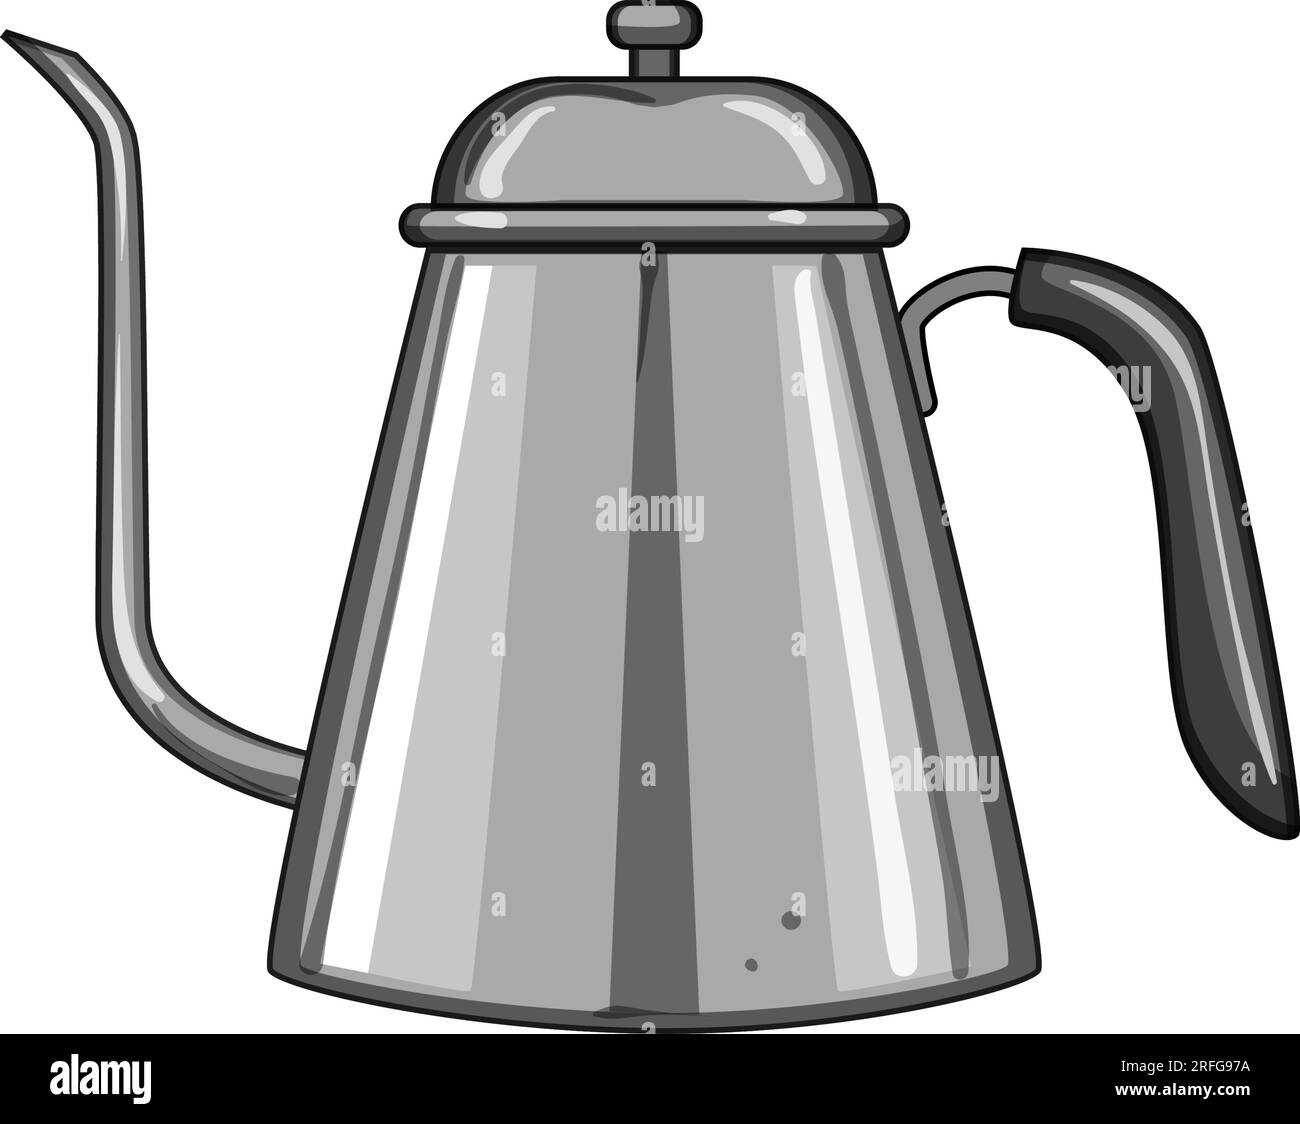 tea steel drip kettle cartoon vector illustration Stock Vector